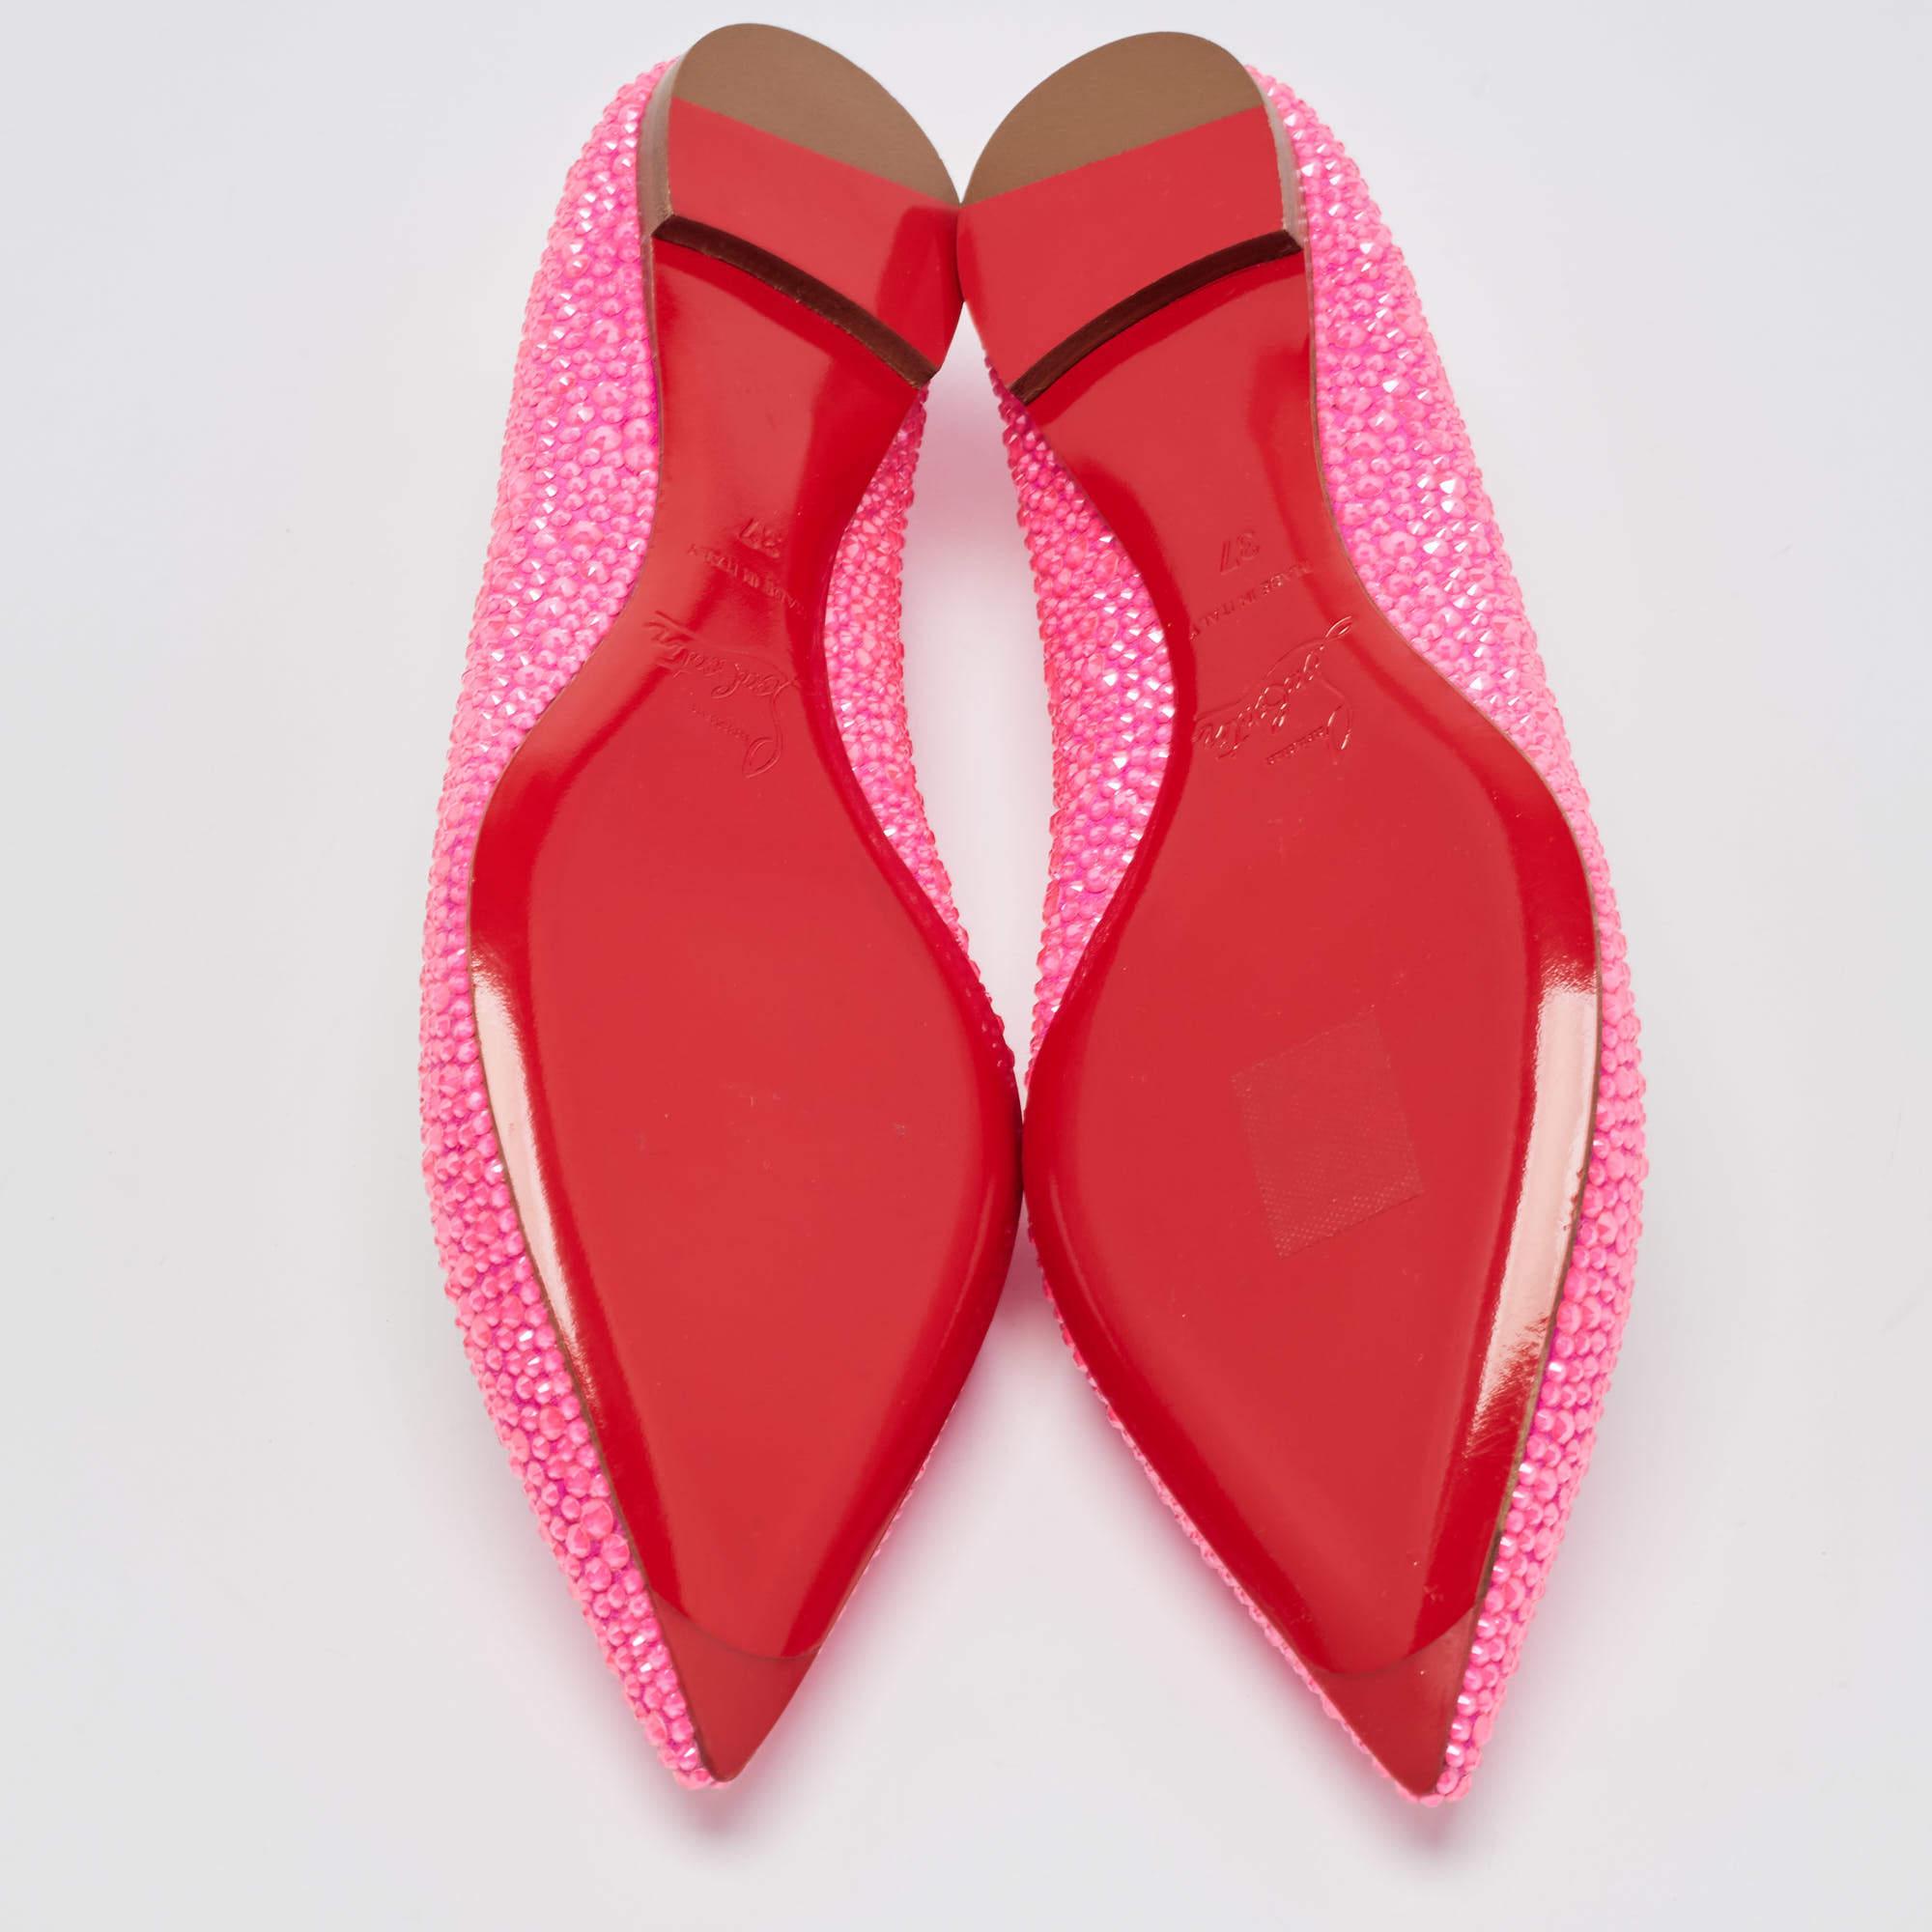 Christian Louboutin Pink Suede Crystal Embellished Ballet Flats Size 37 4